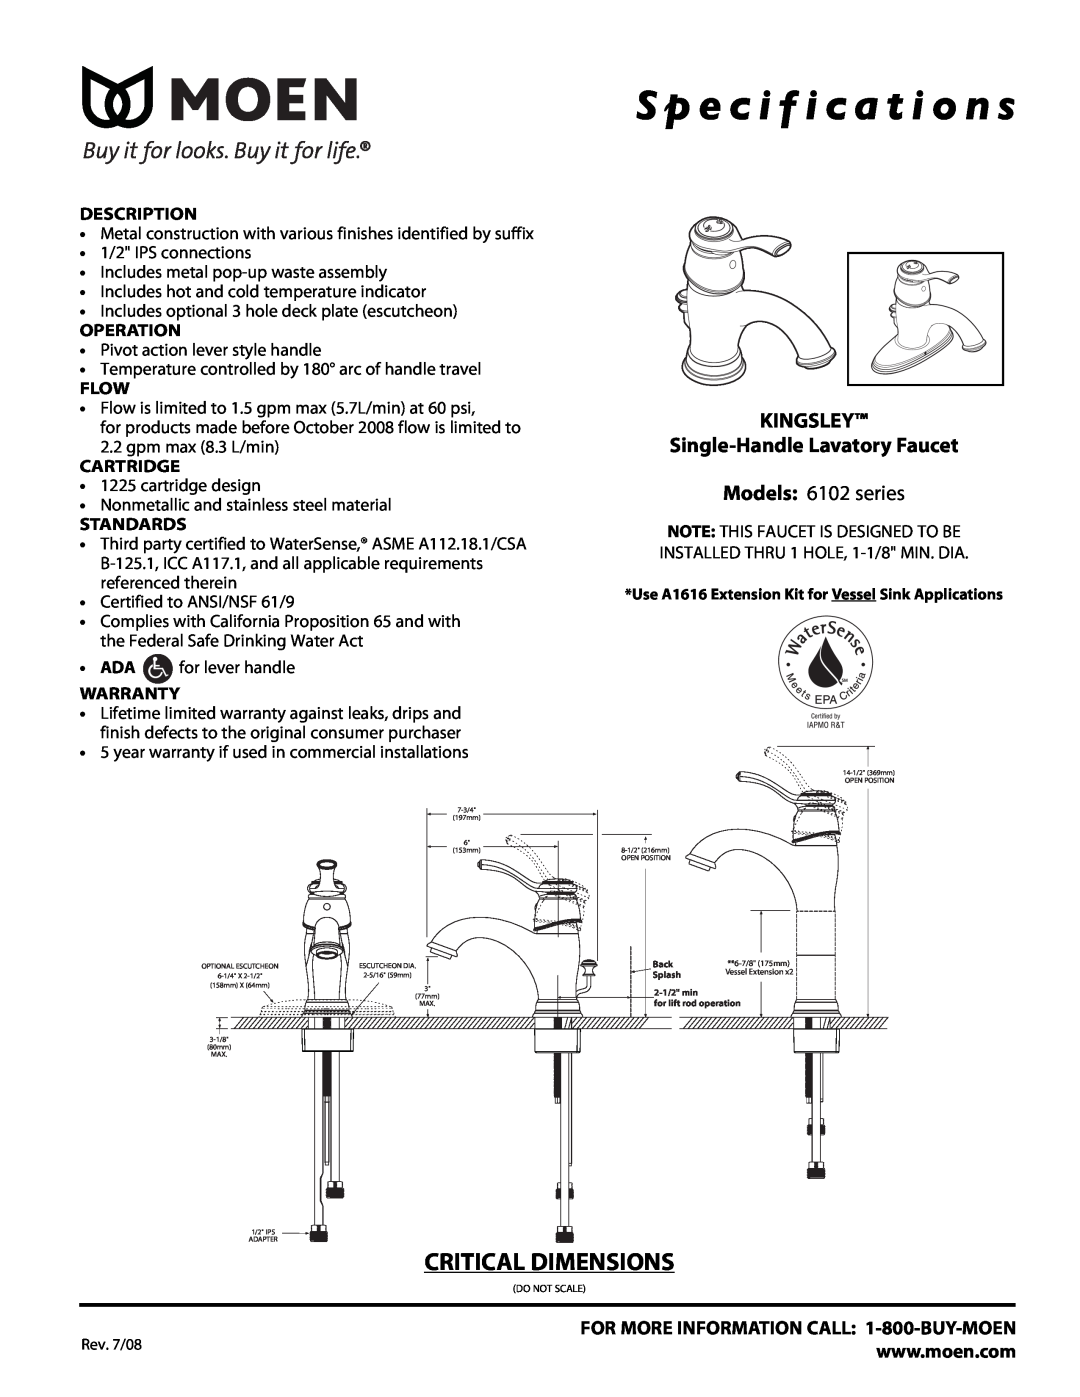 Moen 6102 Series specifications S p e c i f i c a t i o n s, Critical Dimensions, KINGSLEY Single-Handle Lavatory Faucet 